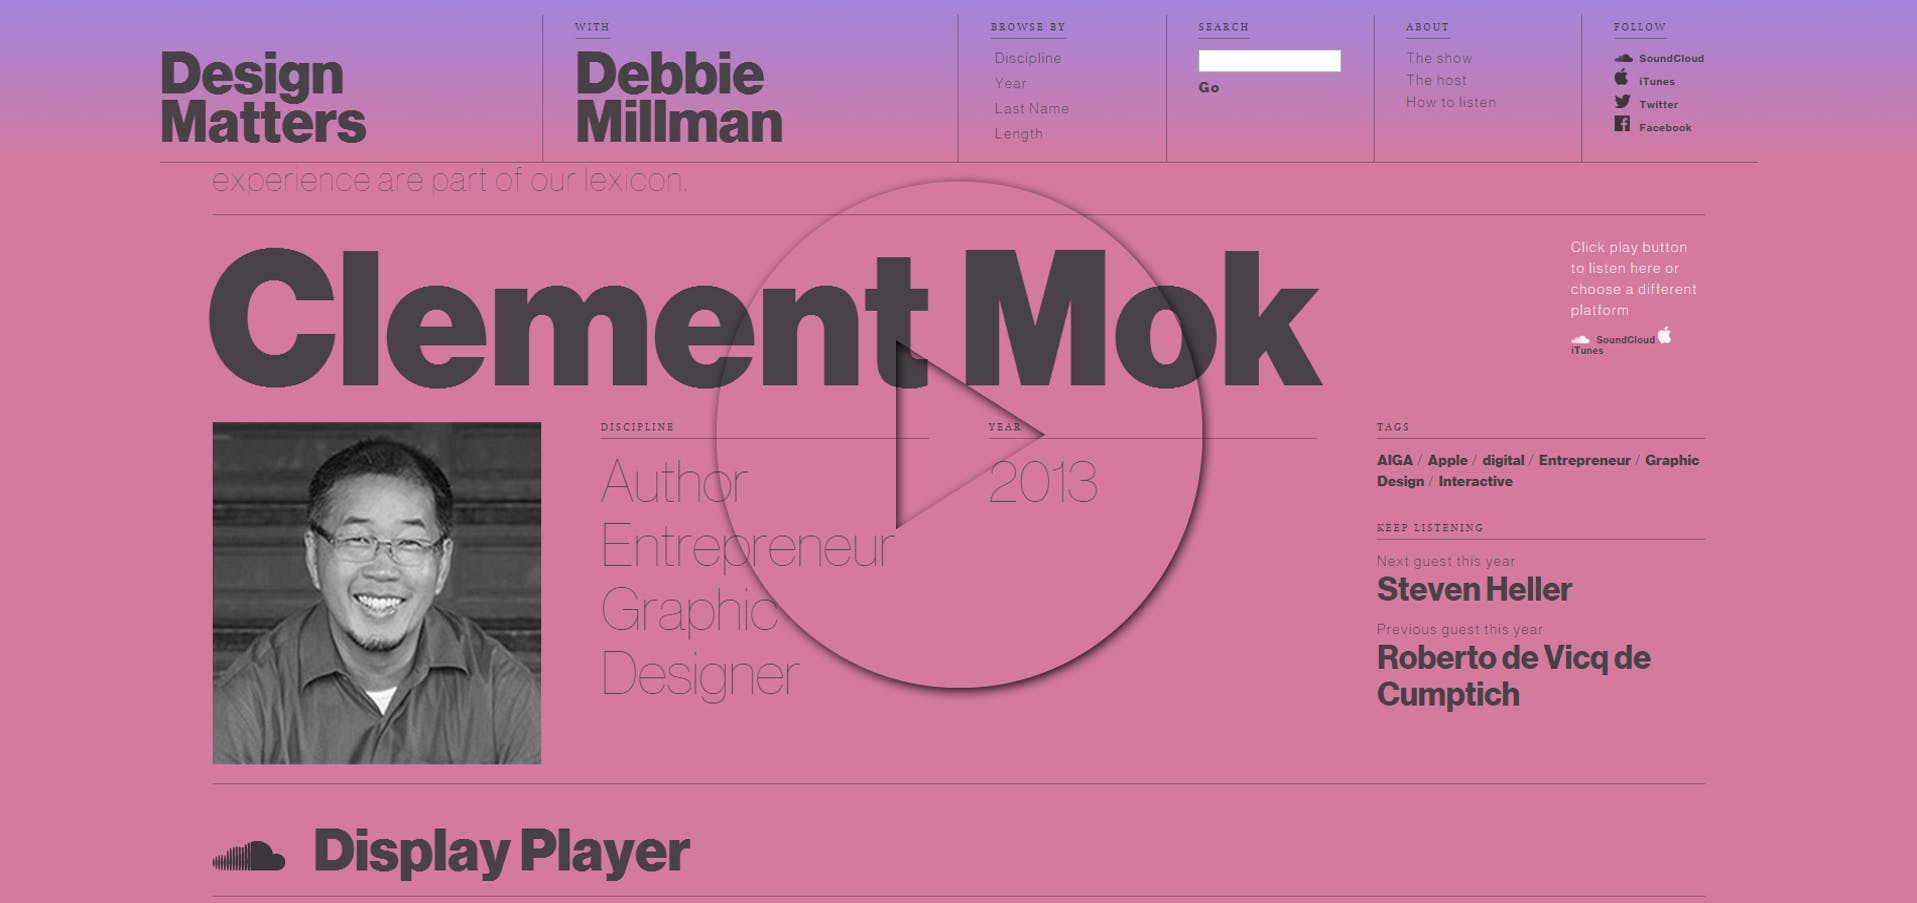 Design Matters - Clement Mok media 1